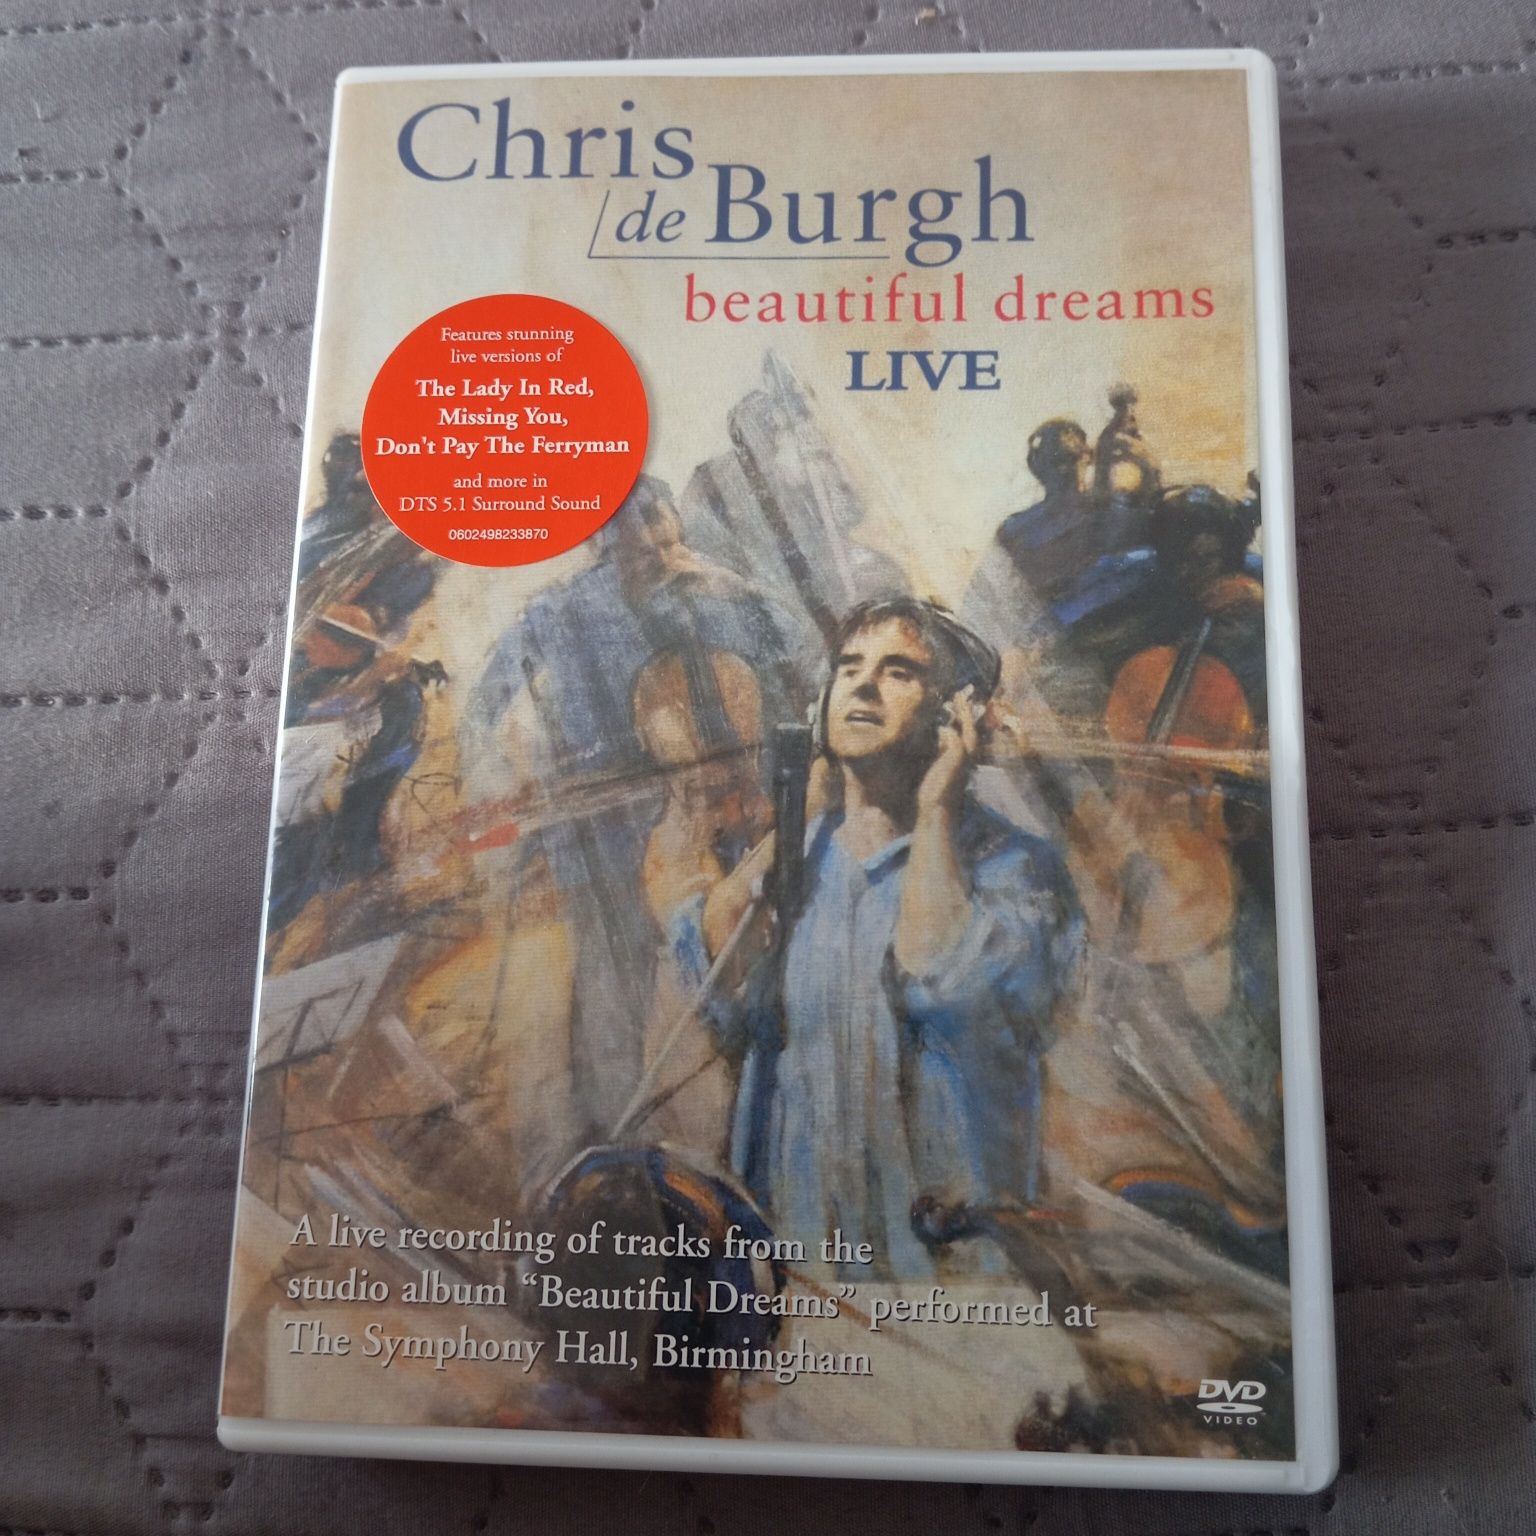 Chris de Burgh "Beutiful dreams" live, DVD stan bdb